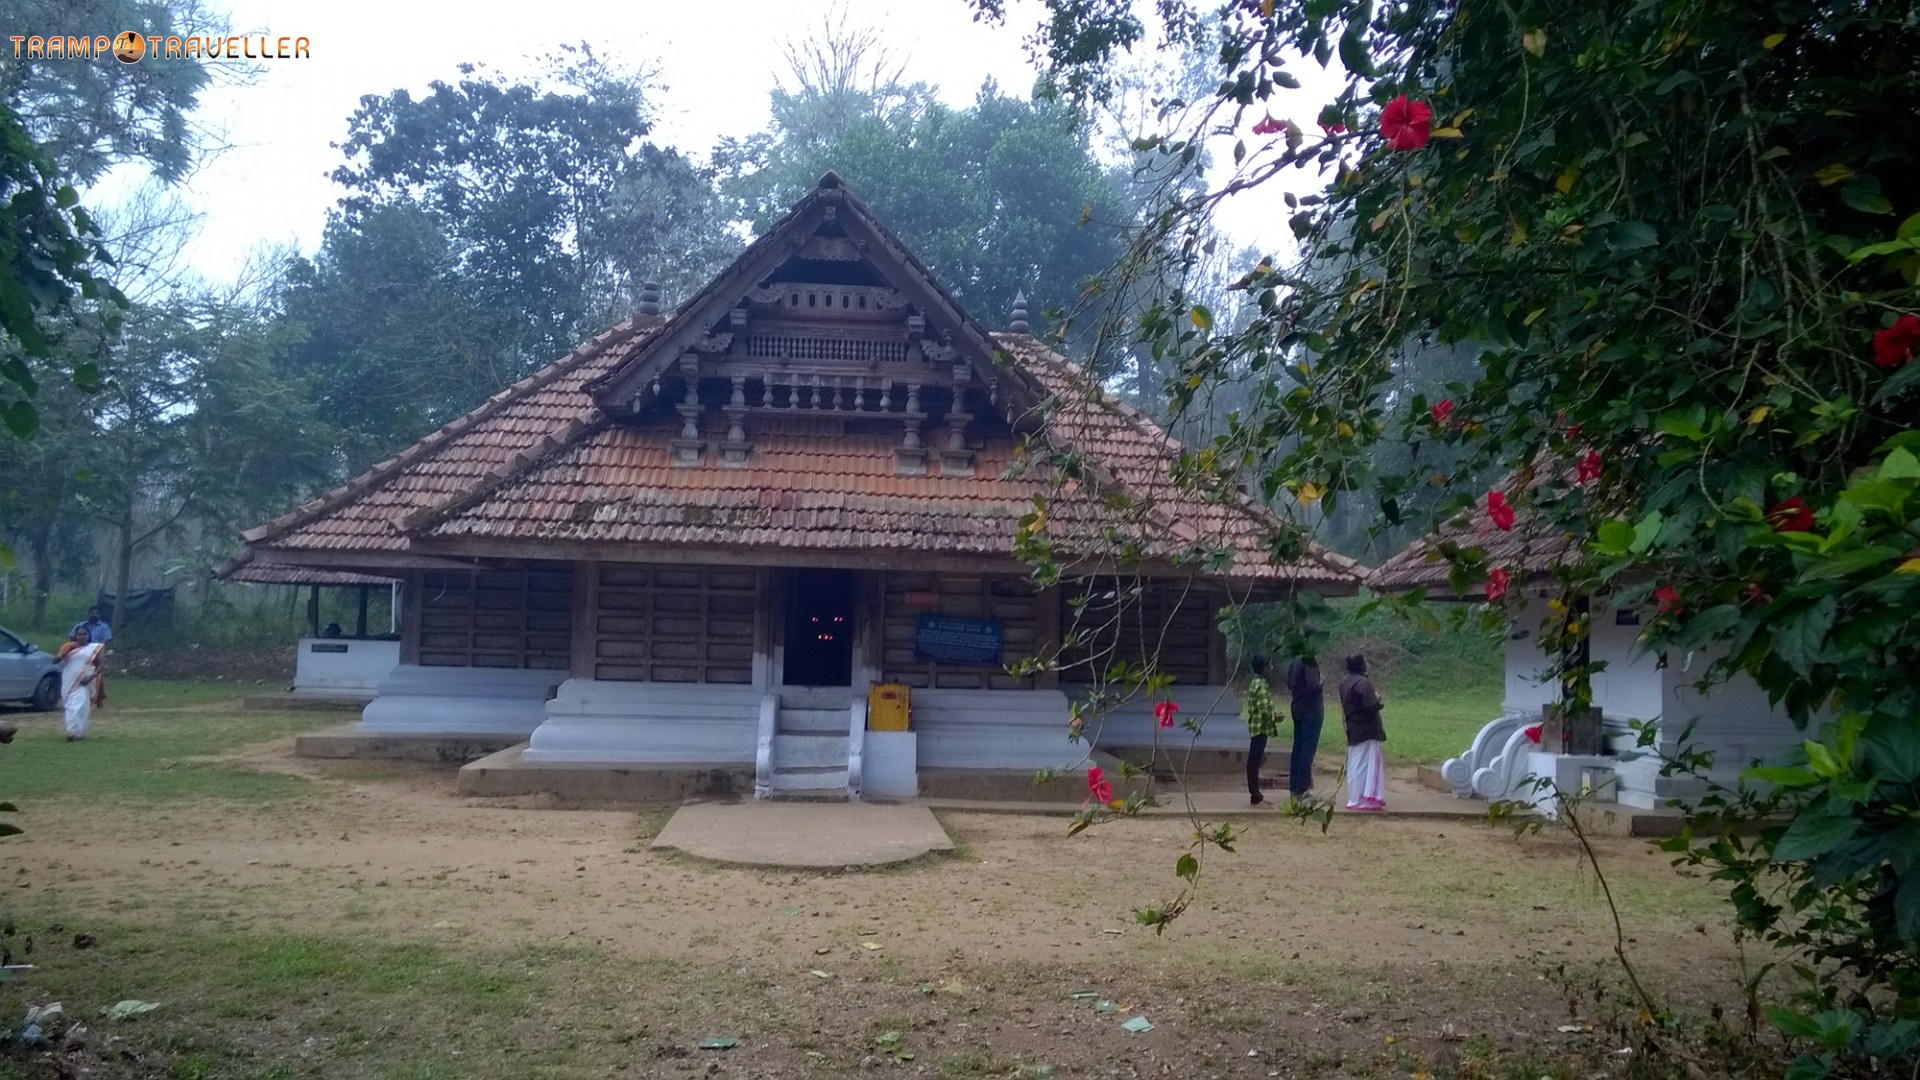 Chetattin Kavu Temple